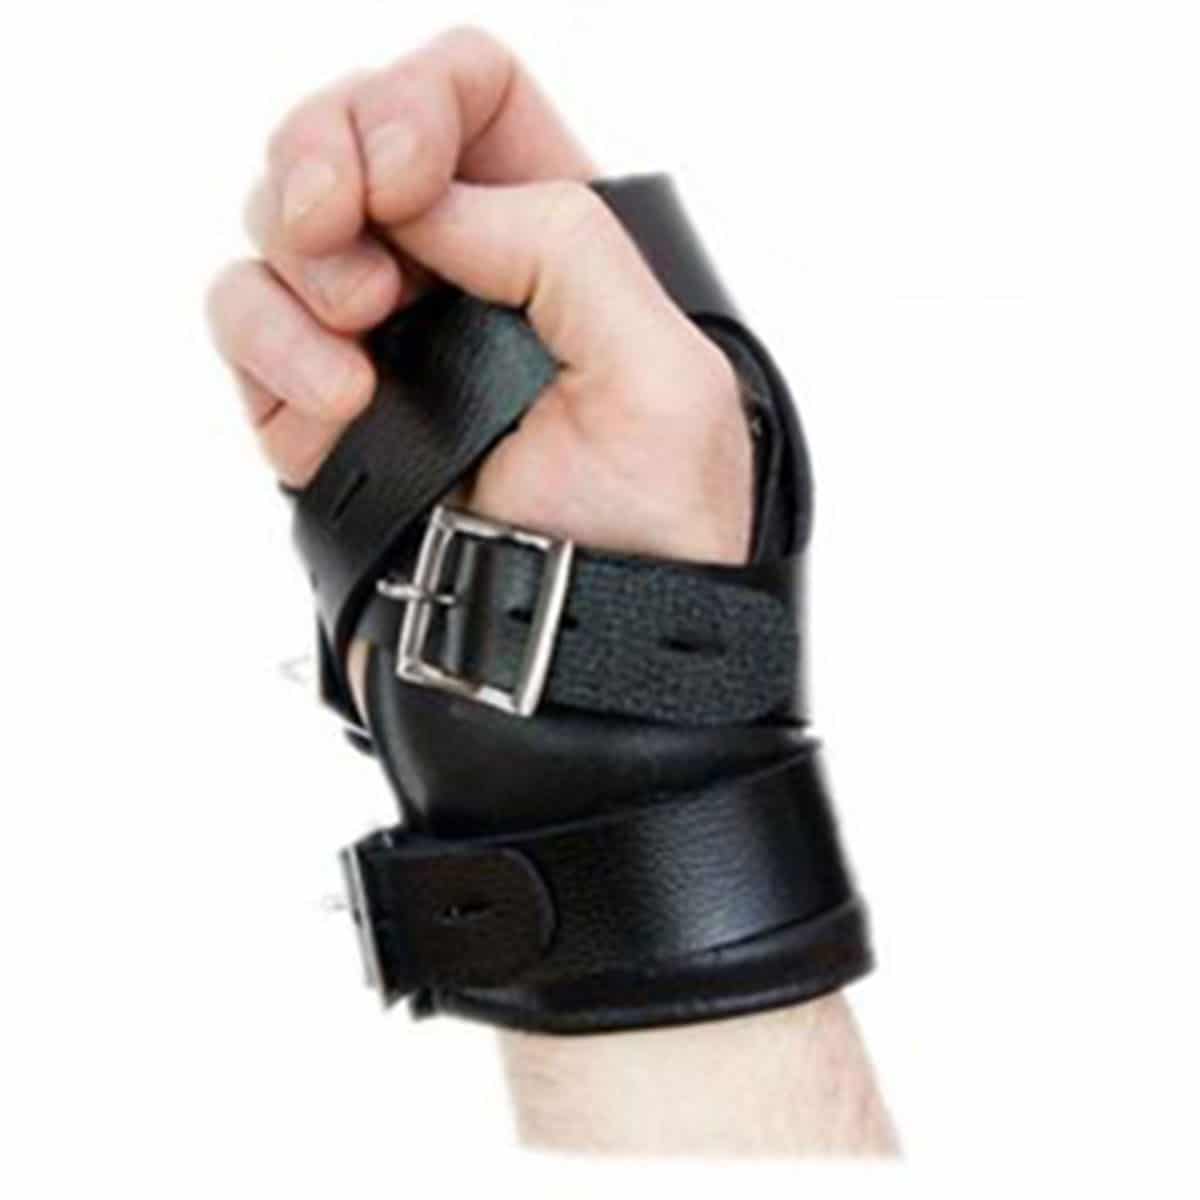 Leather Suspension Hand Wrist Cuffs with Locking Buckles - CUFF3